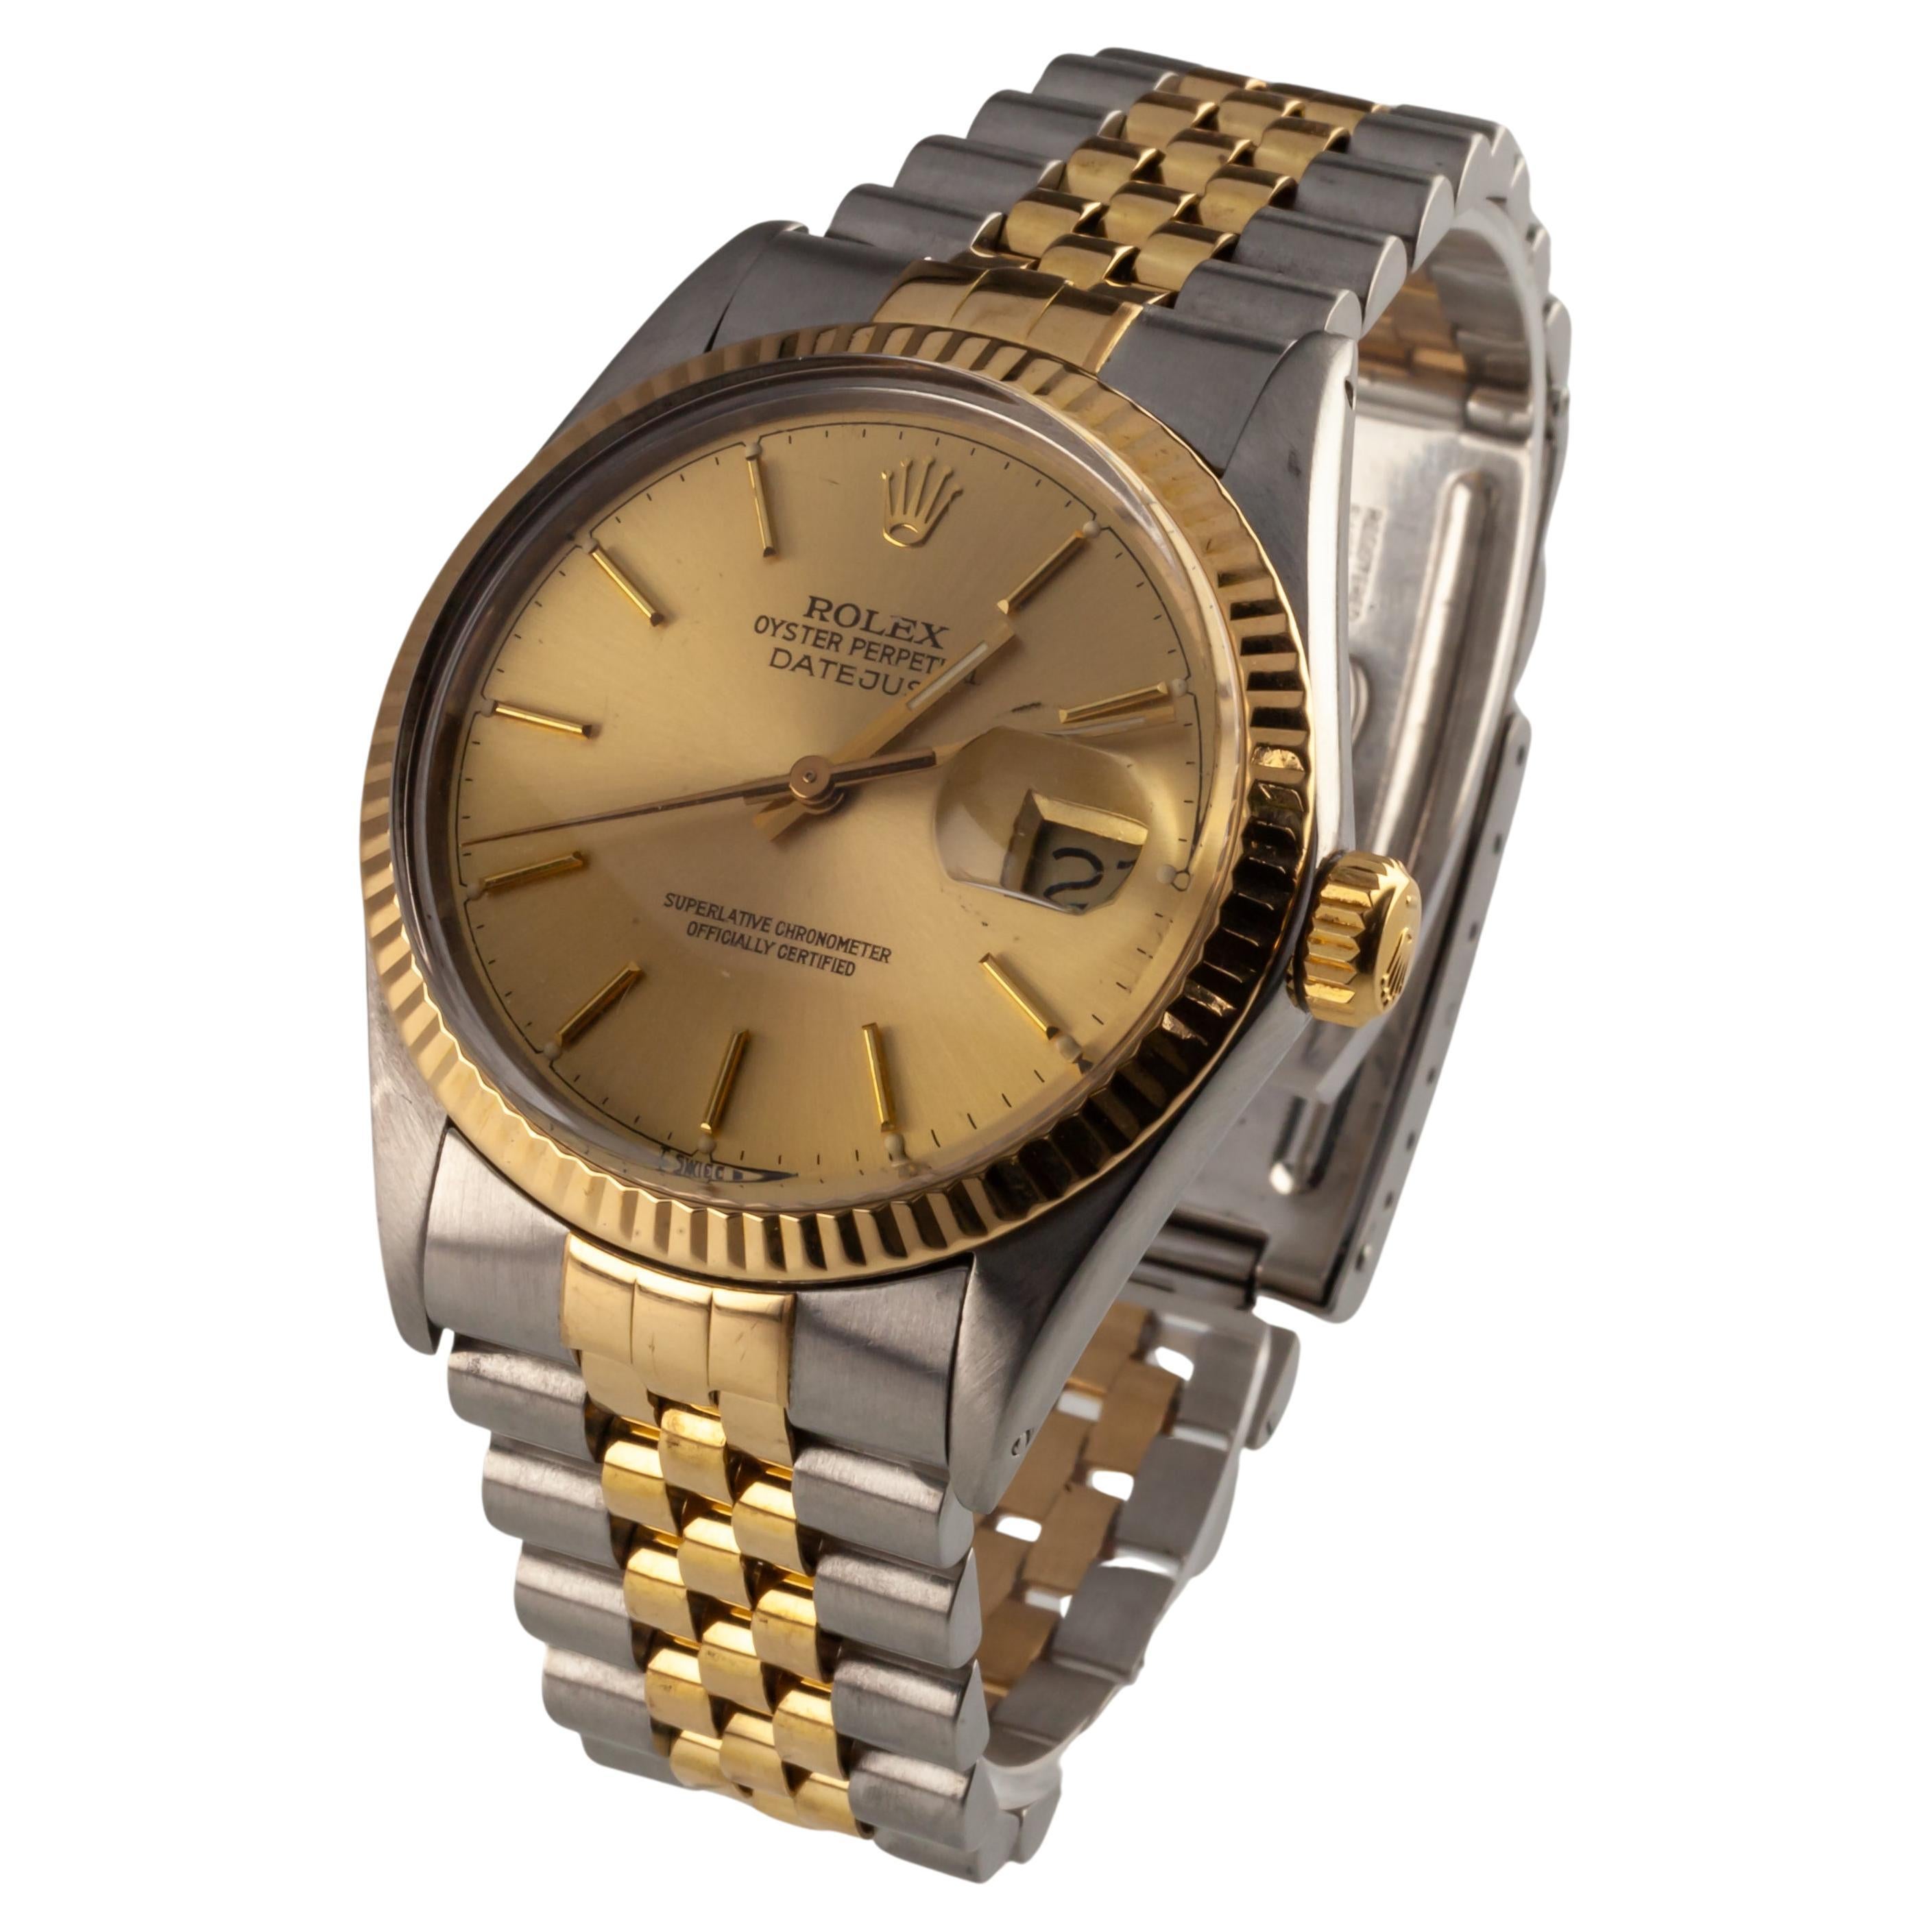 Rolex Men's Two-Tone Jubilee Oyster Perpetual Datejust Watch 16013 1986